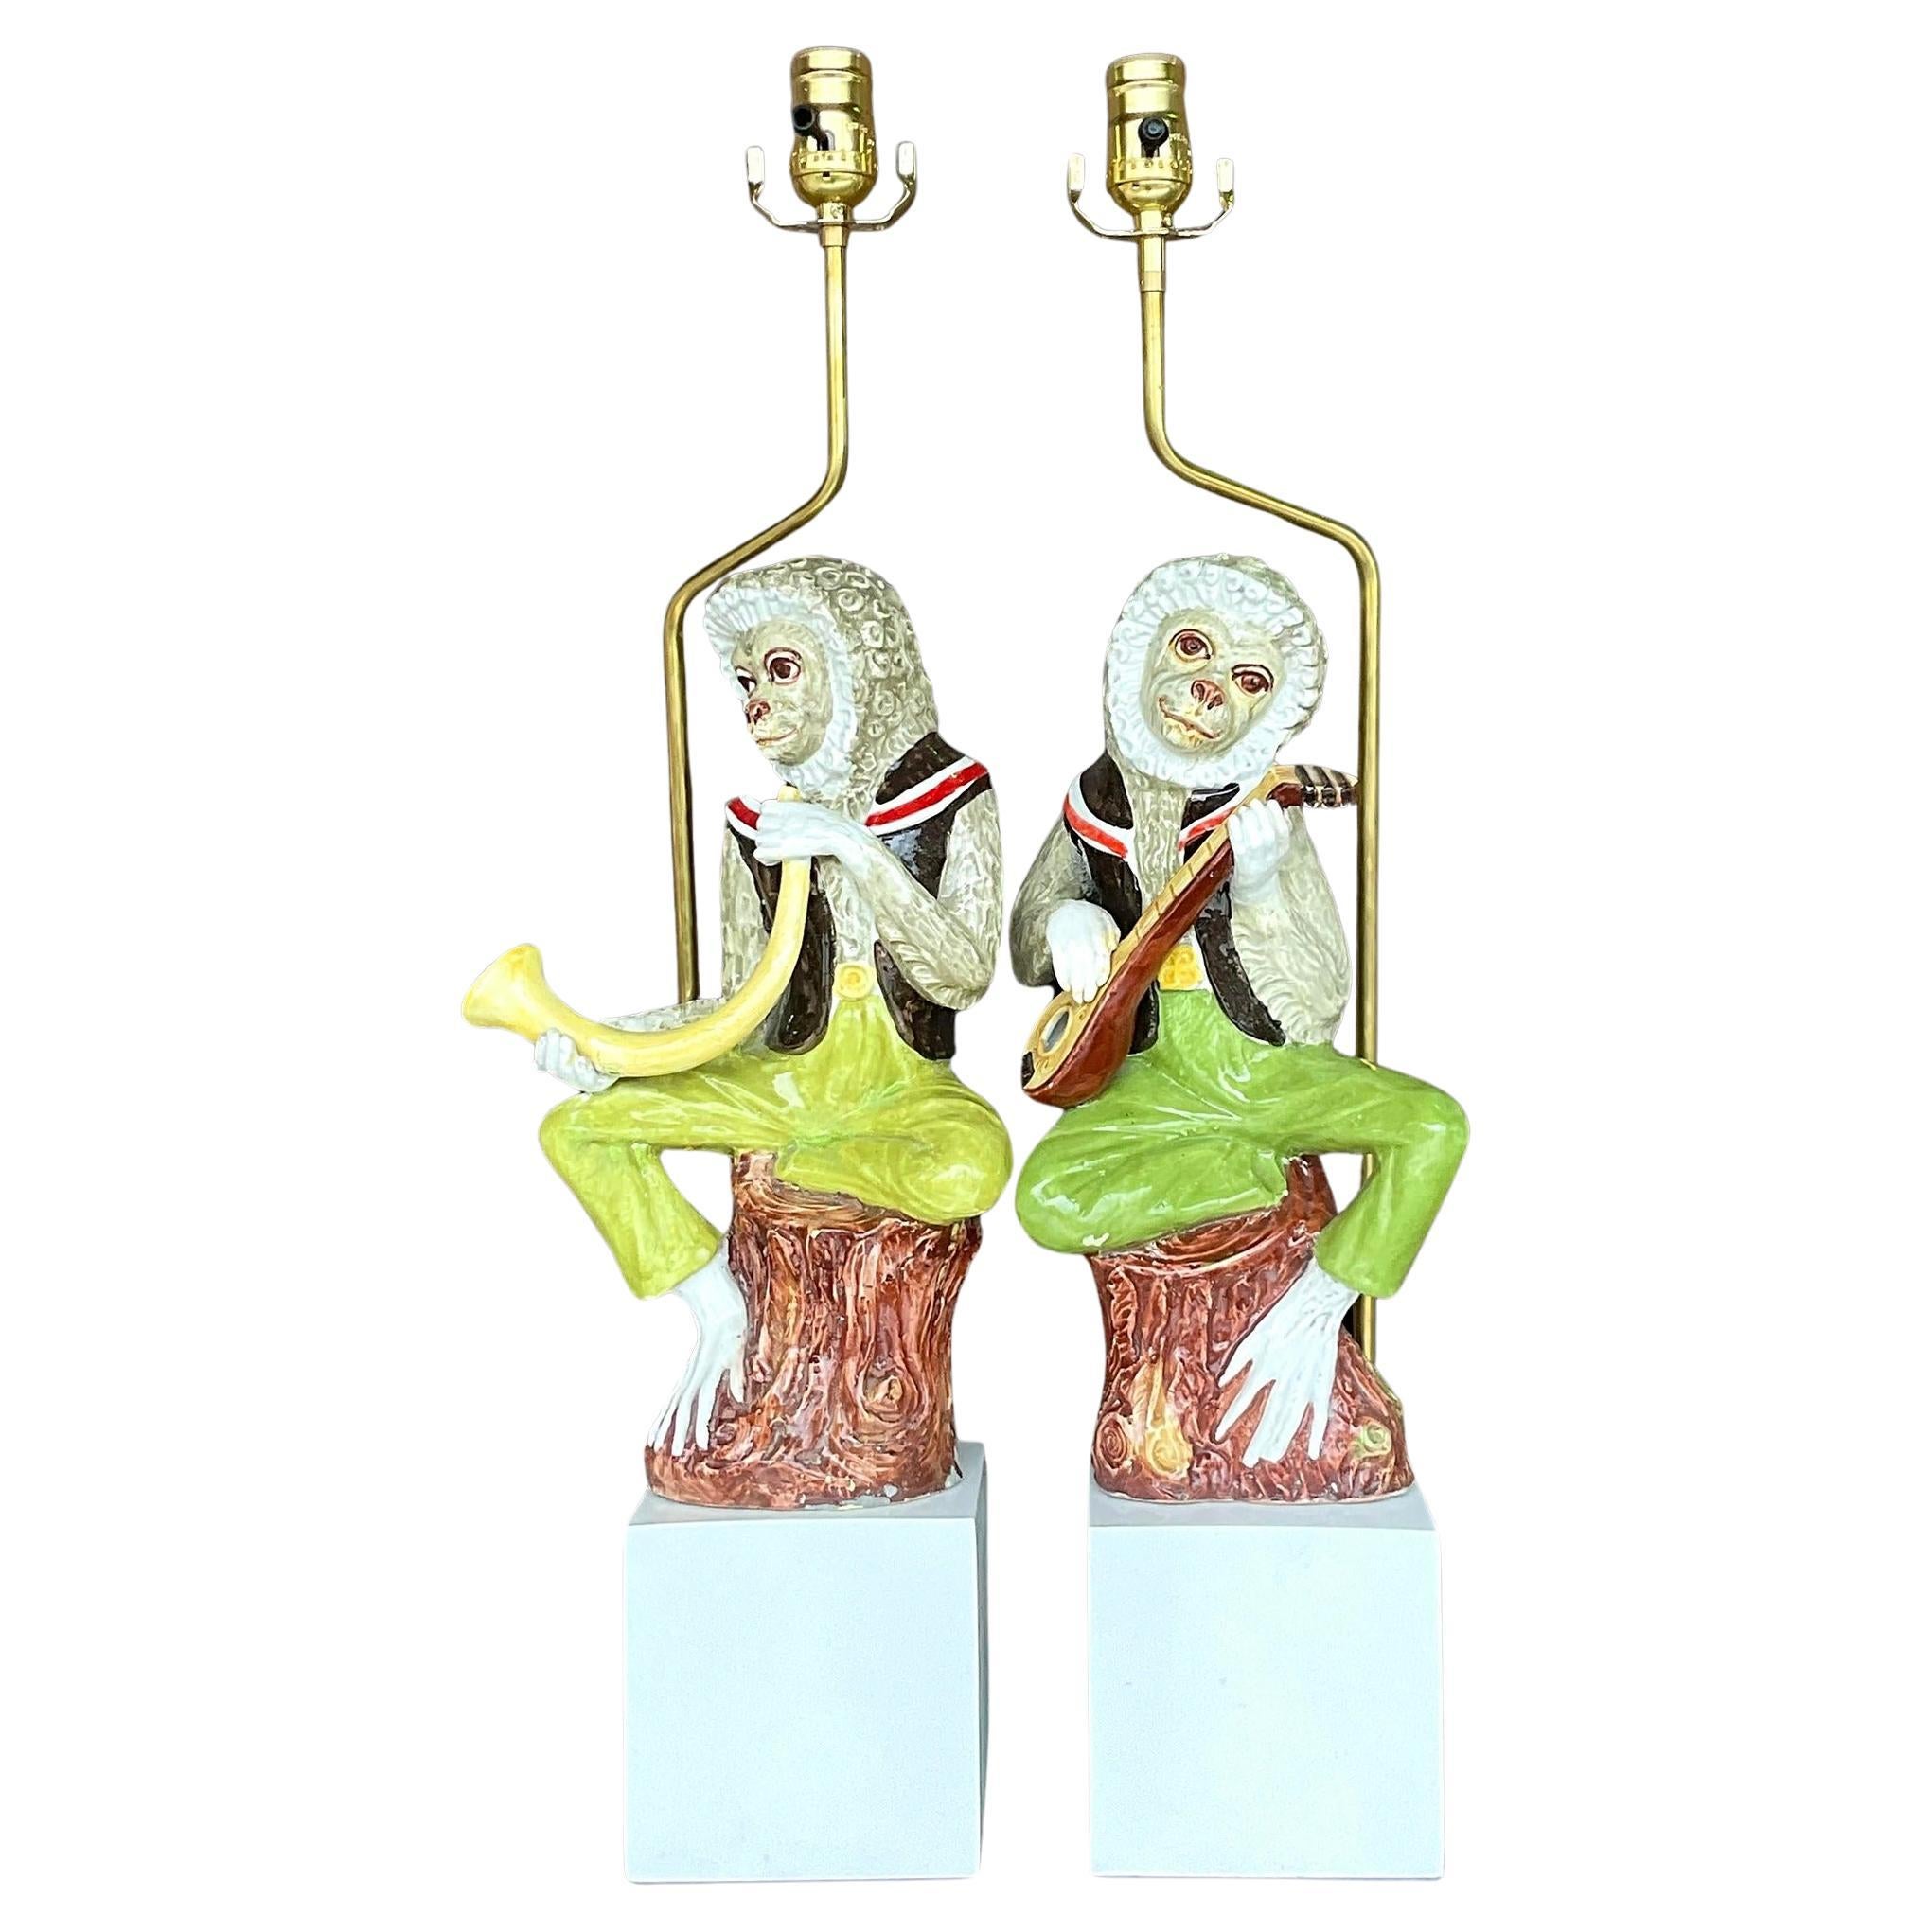 Vintage Boho Glazed Ceramic Monkey Lamps - a Pair